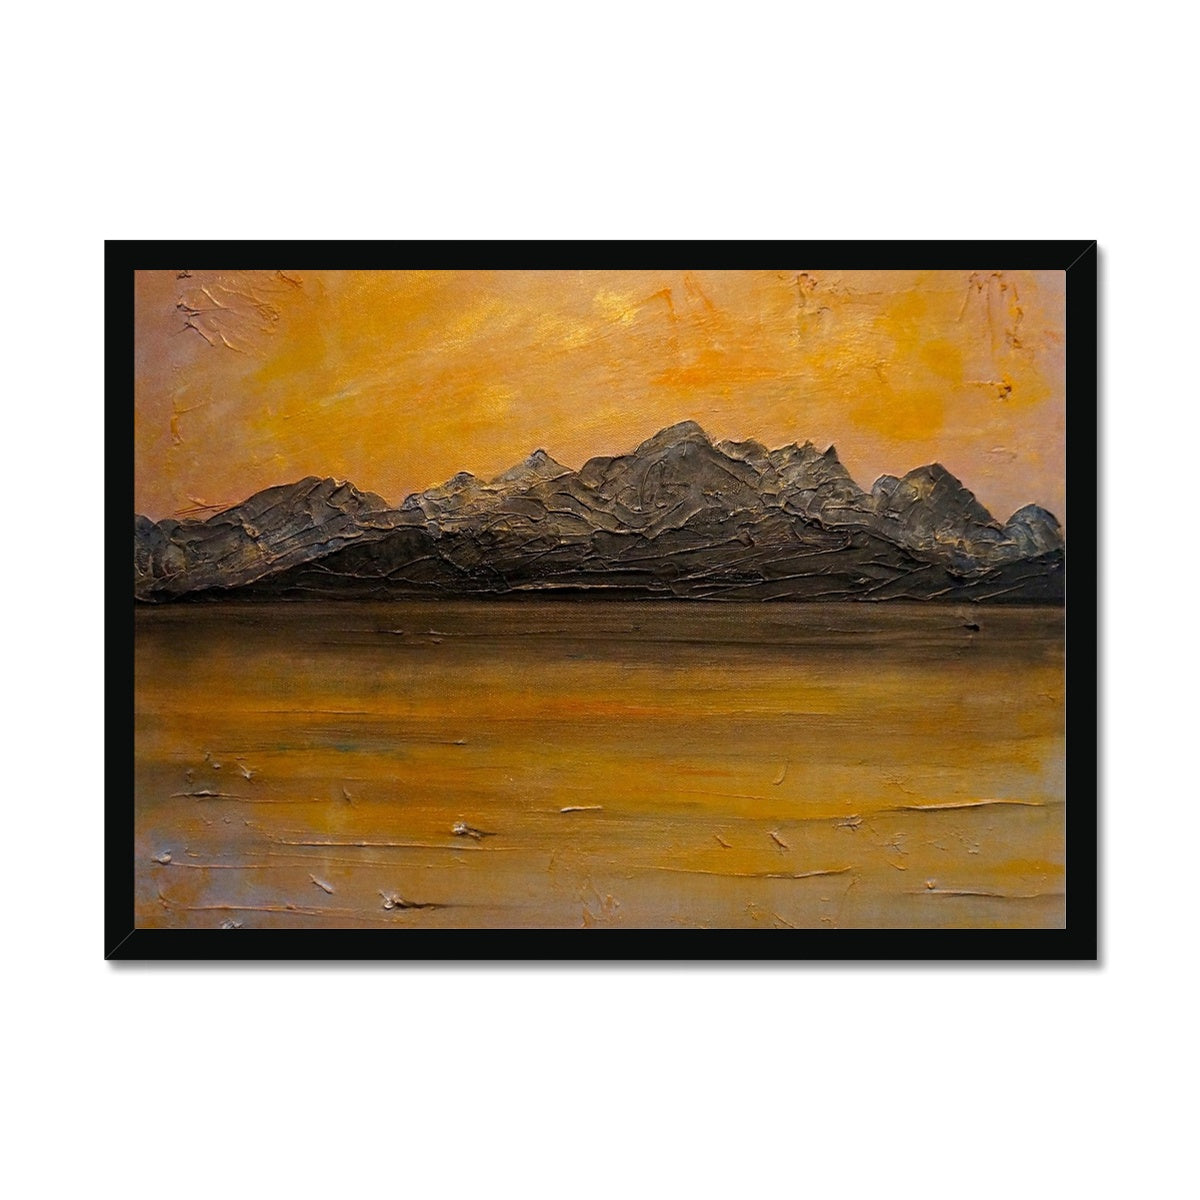 Cuillin Sunset Skye Painting | Framed Prints From Scotland-Framed Prints-Skye Art Gallery-A2 Landscape-Black Frame-Paintings, Prints, Homeware, Art Gifts From Scotland By Scottish Artist Kevin Hunter